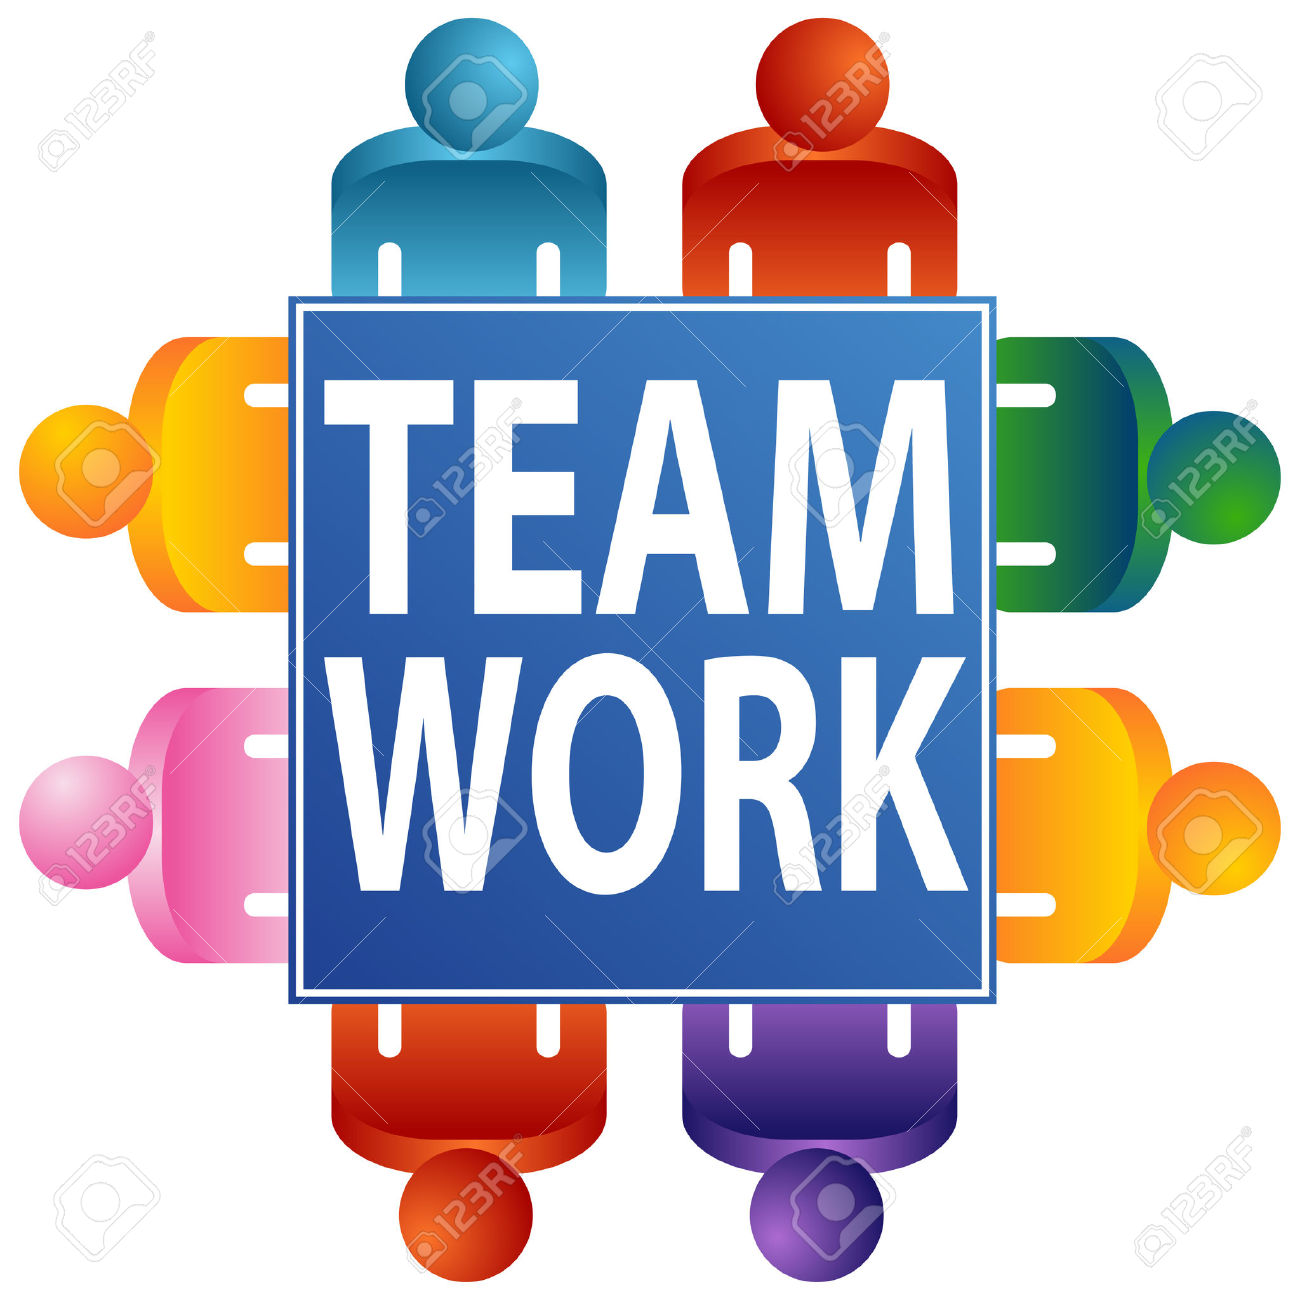 teamwork clipart workplace